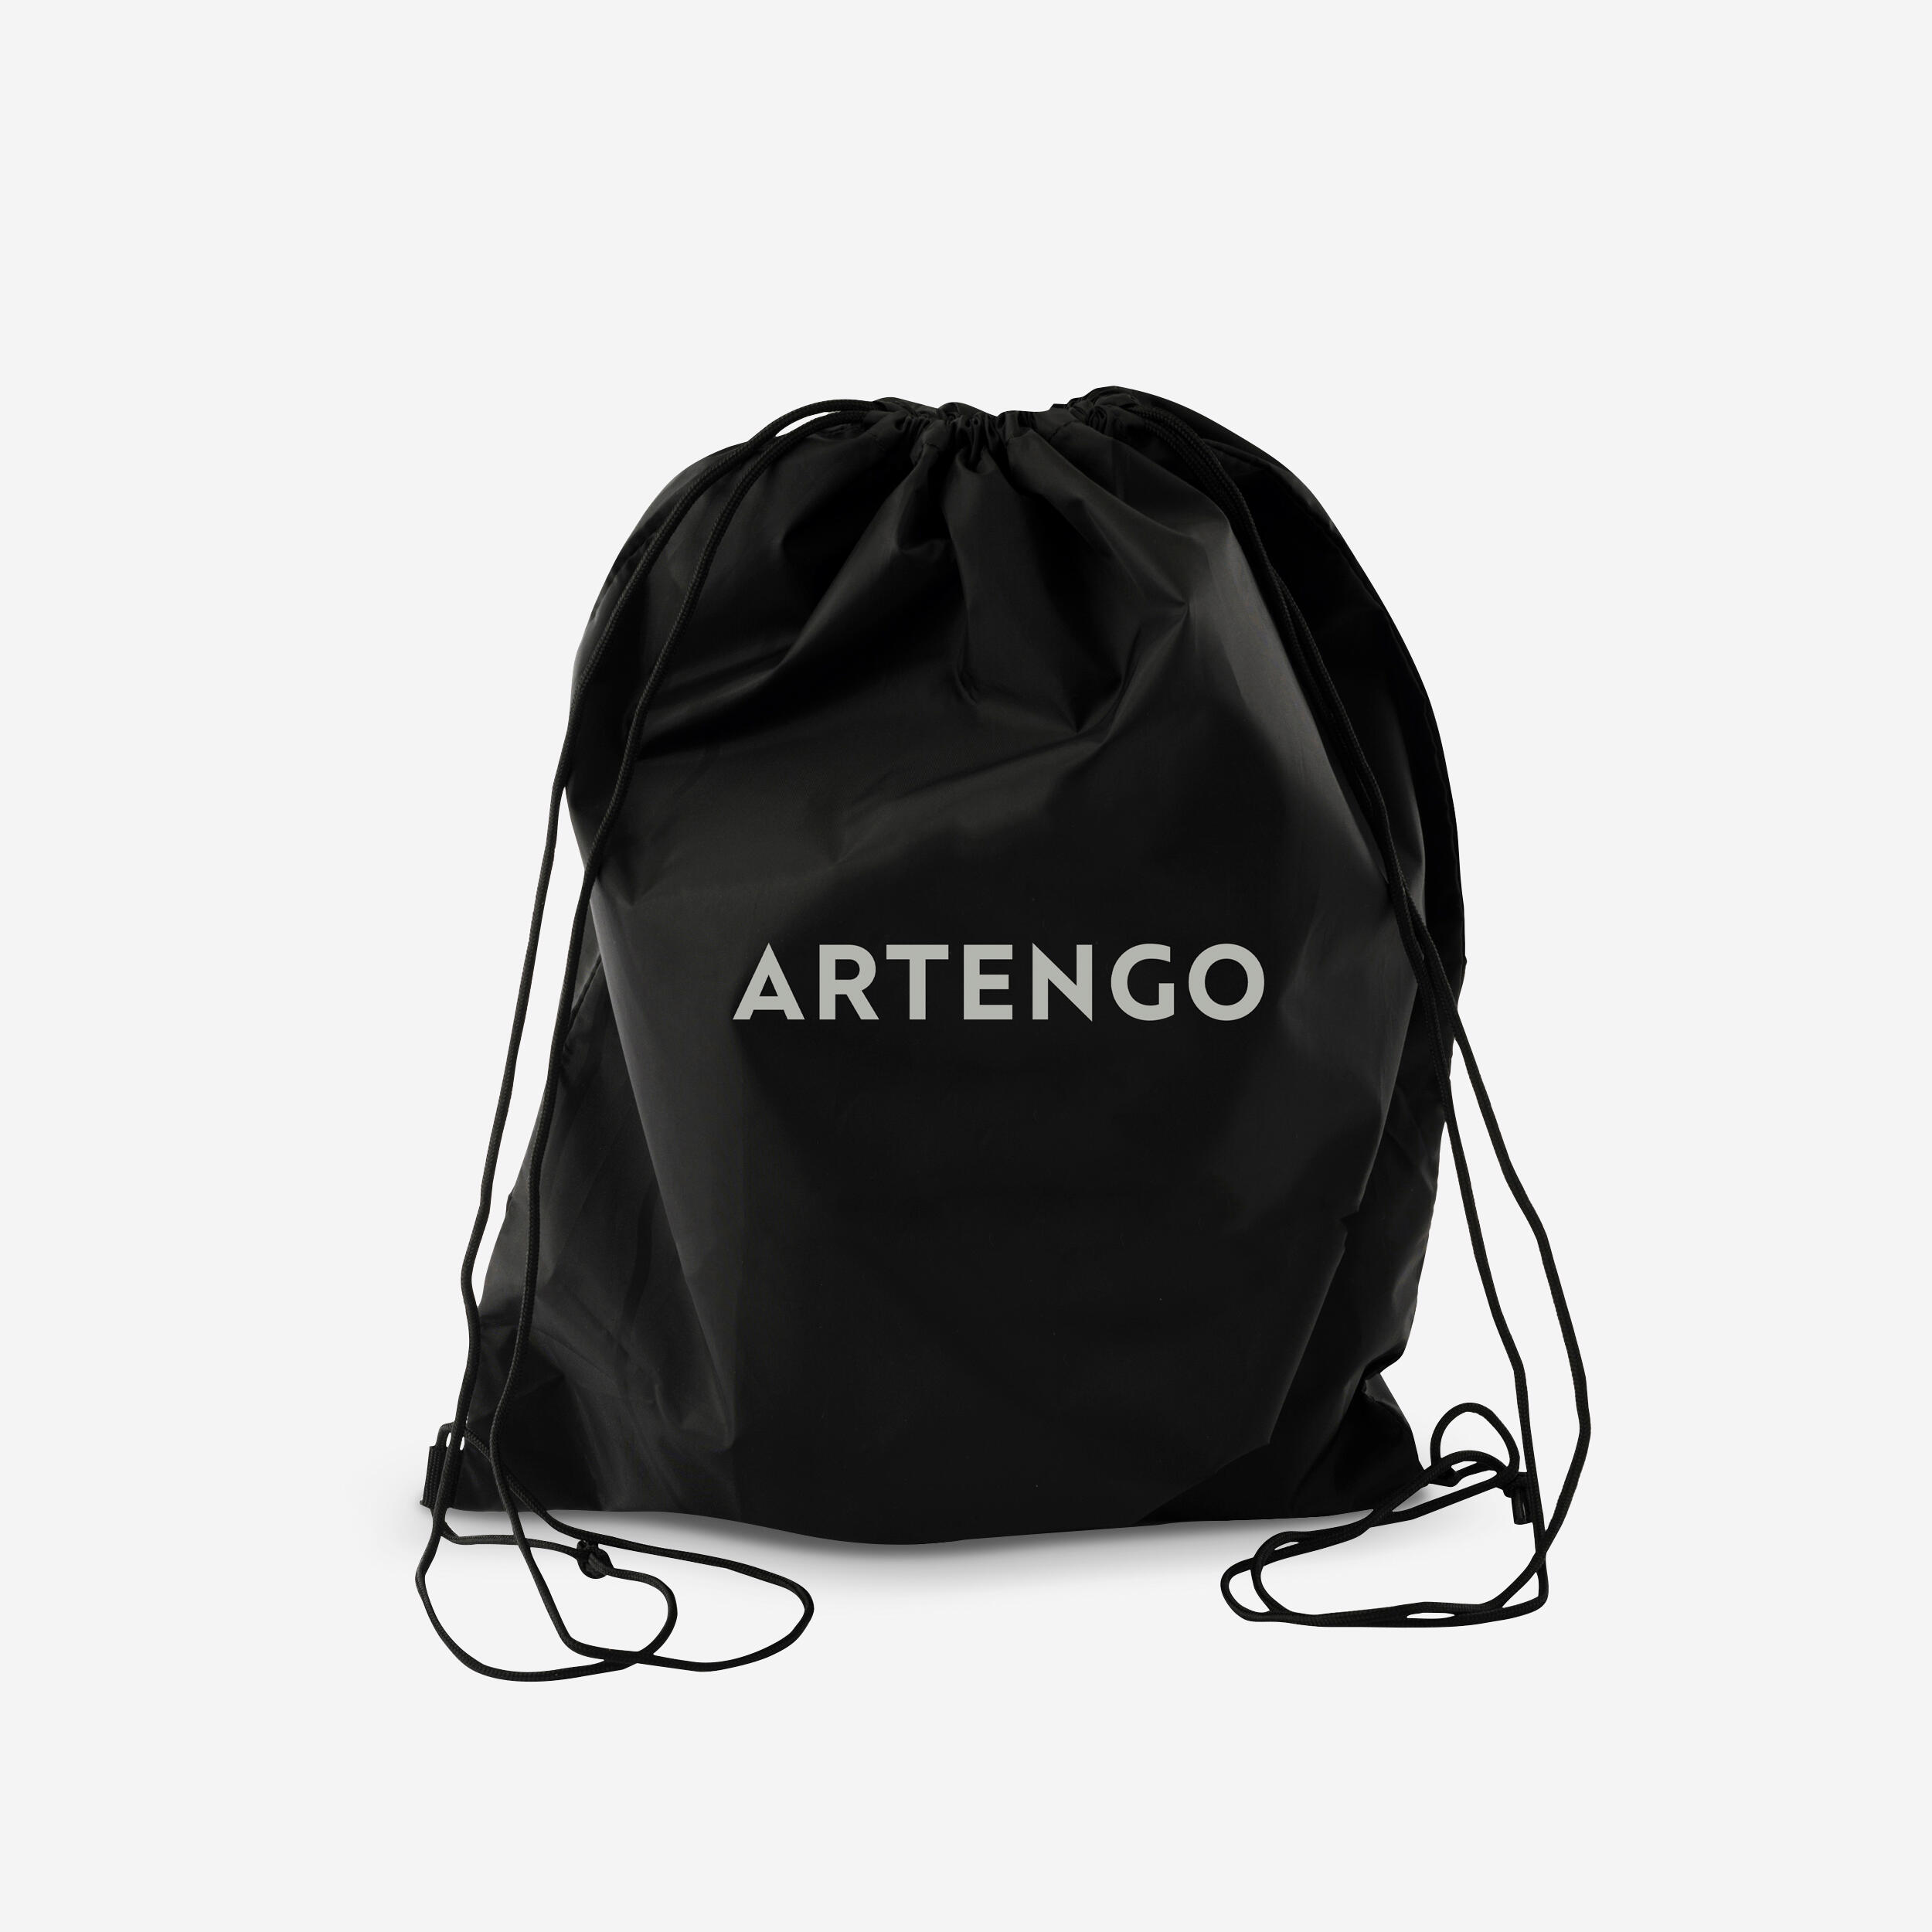 ARTENGO Shoe Bag - Black